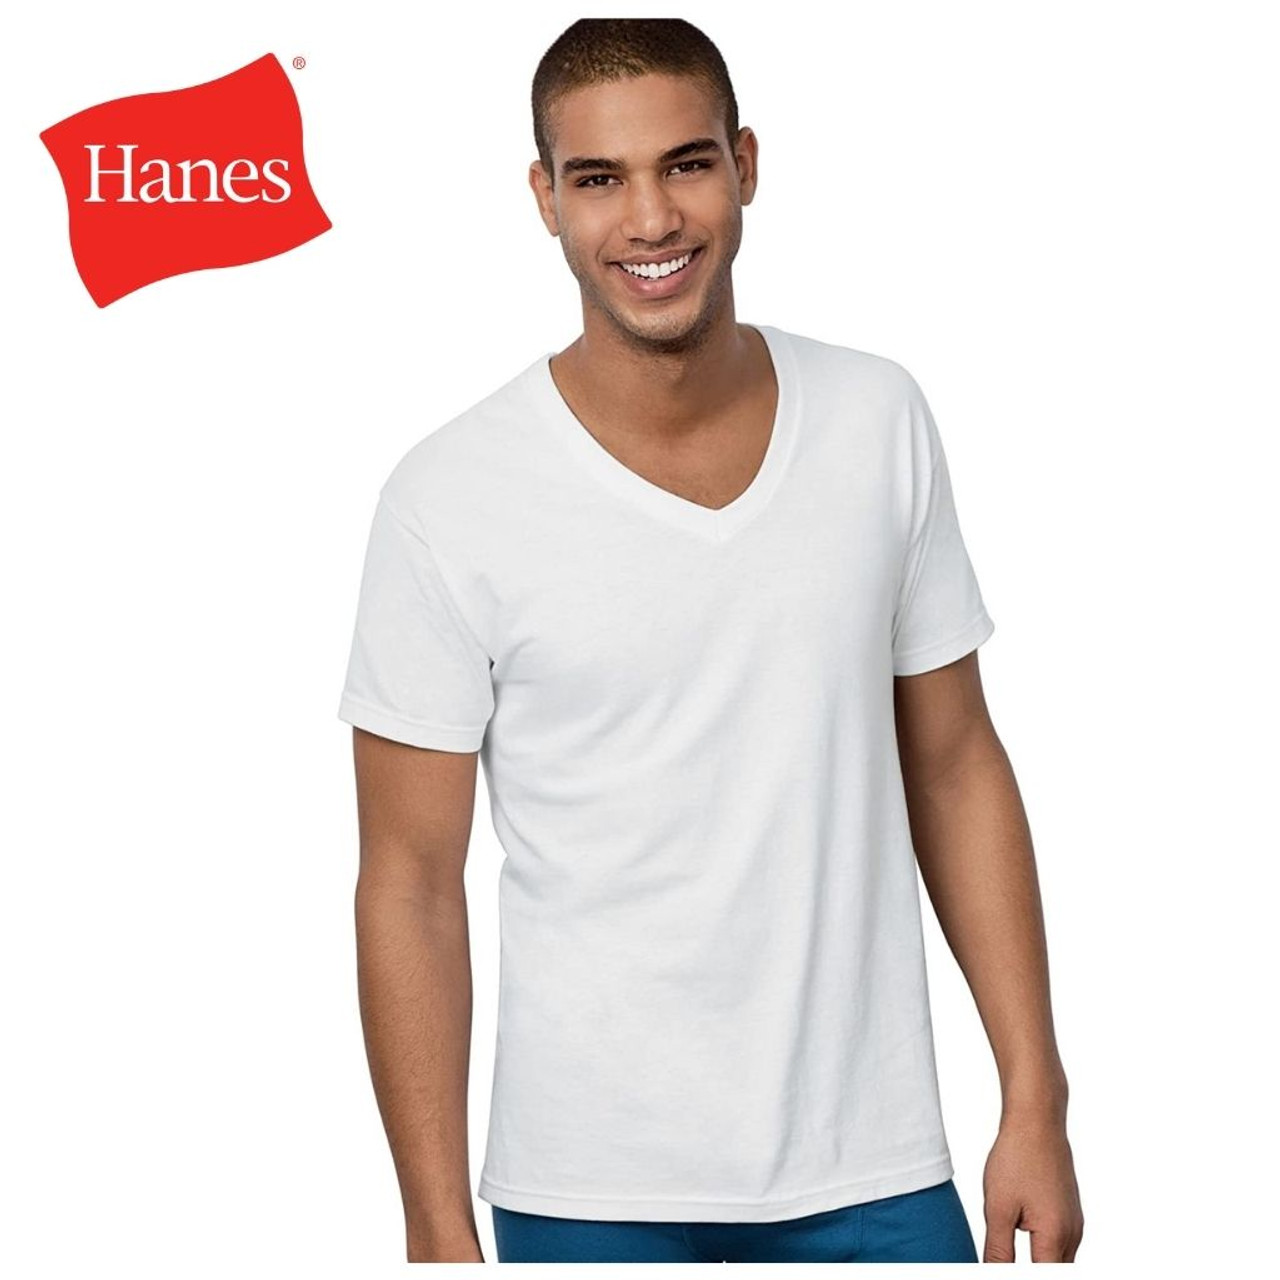 Hanes Comfortsoft T-Shirts for Men